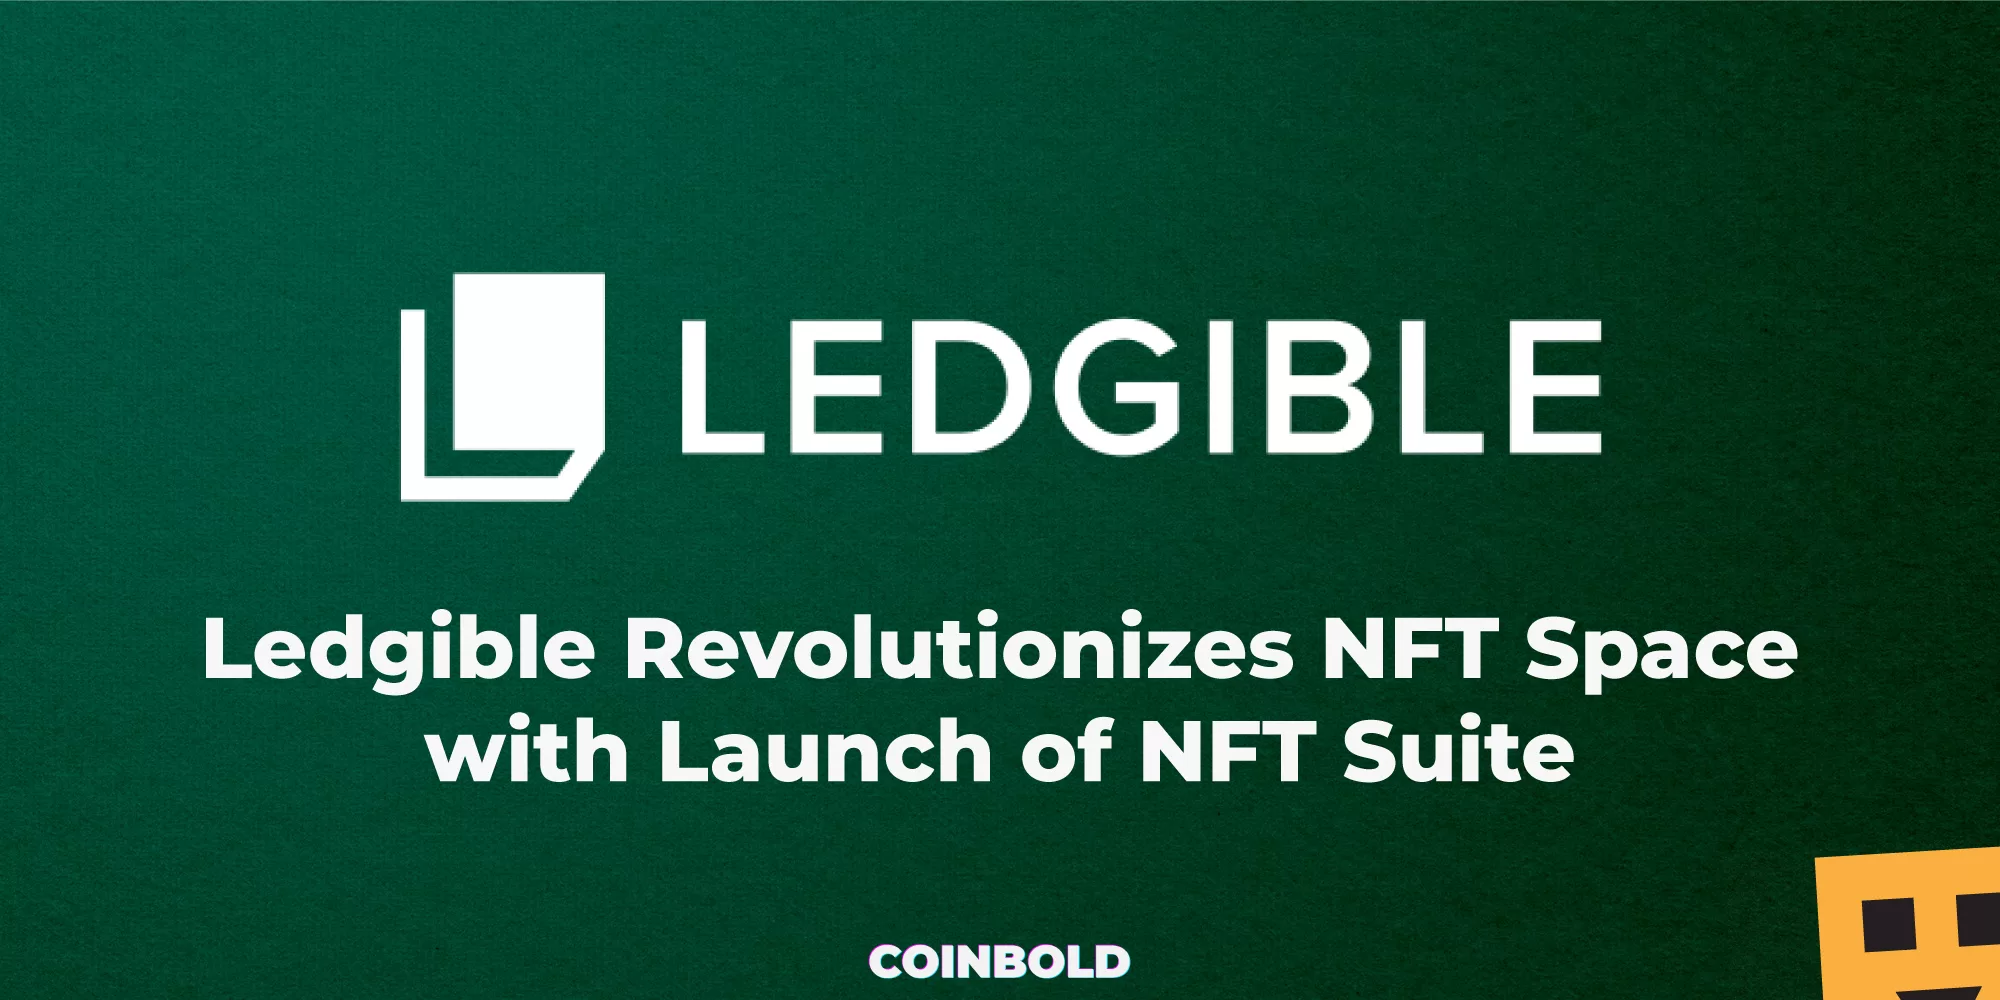 Ledgible Revolutionizes NFT Space with Launch of NFT Suite